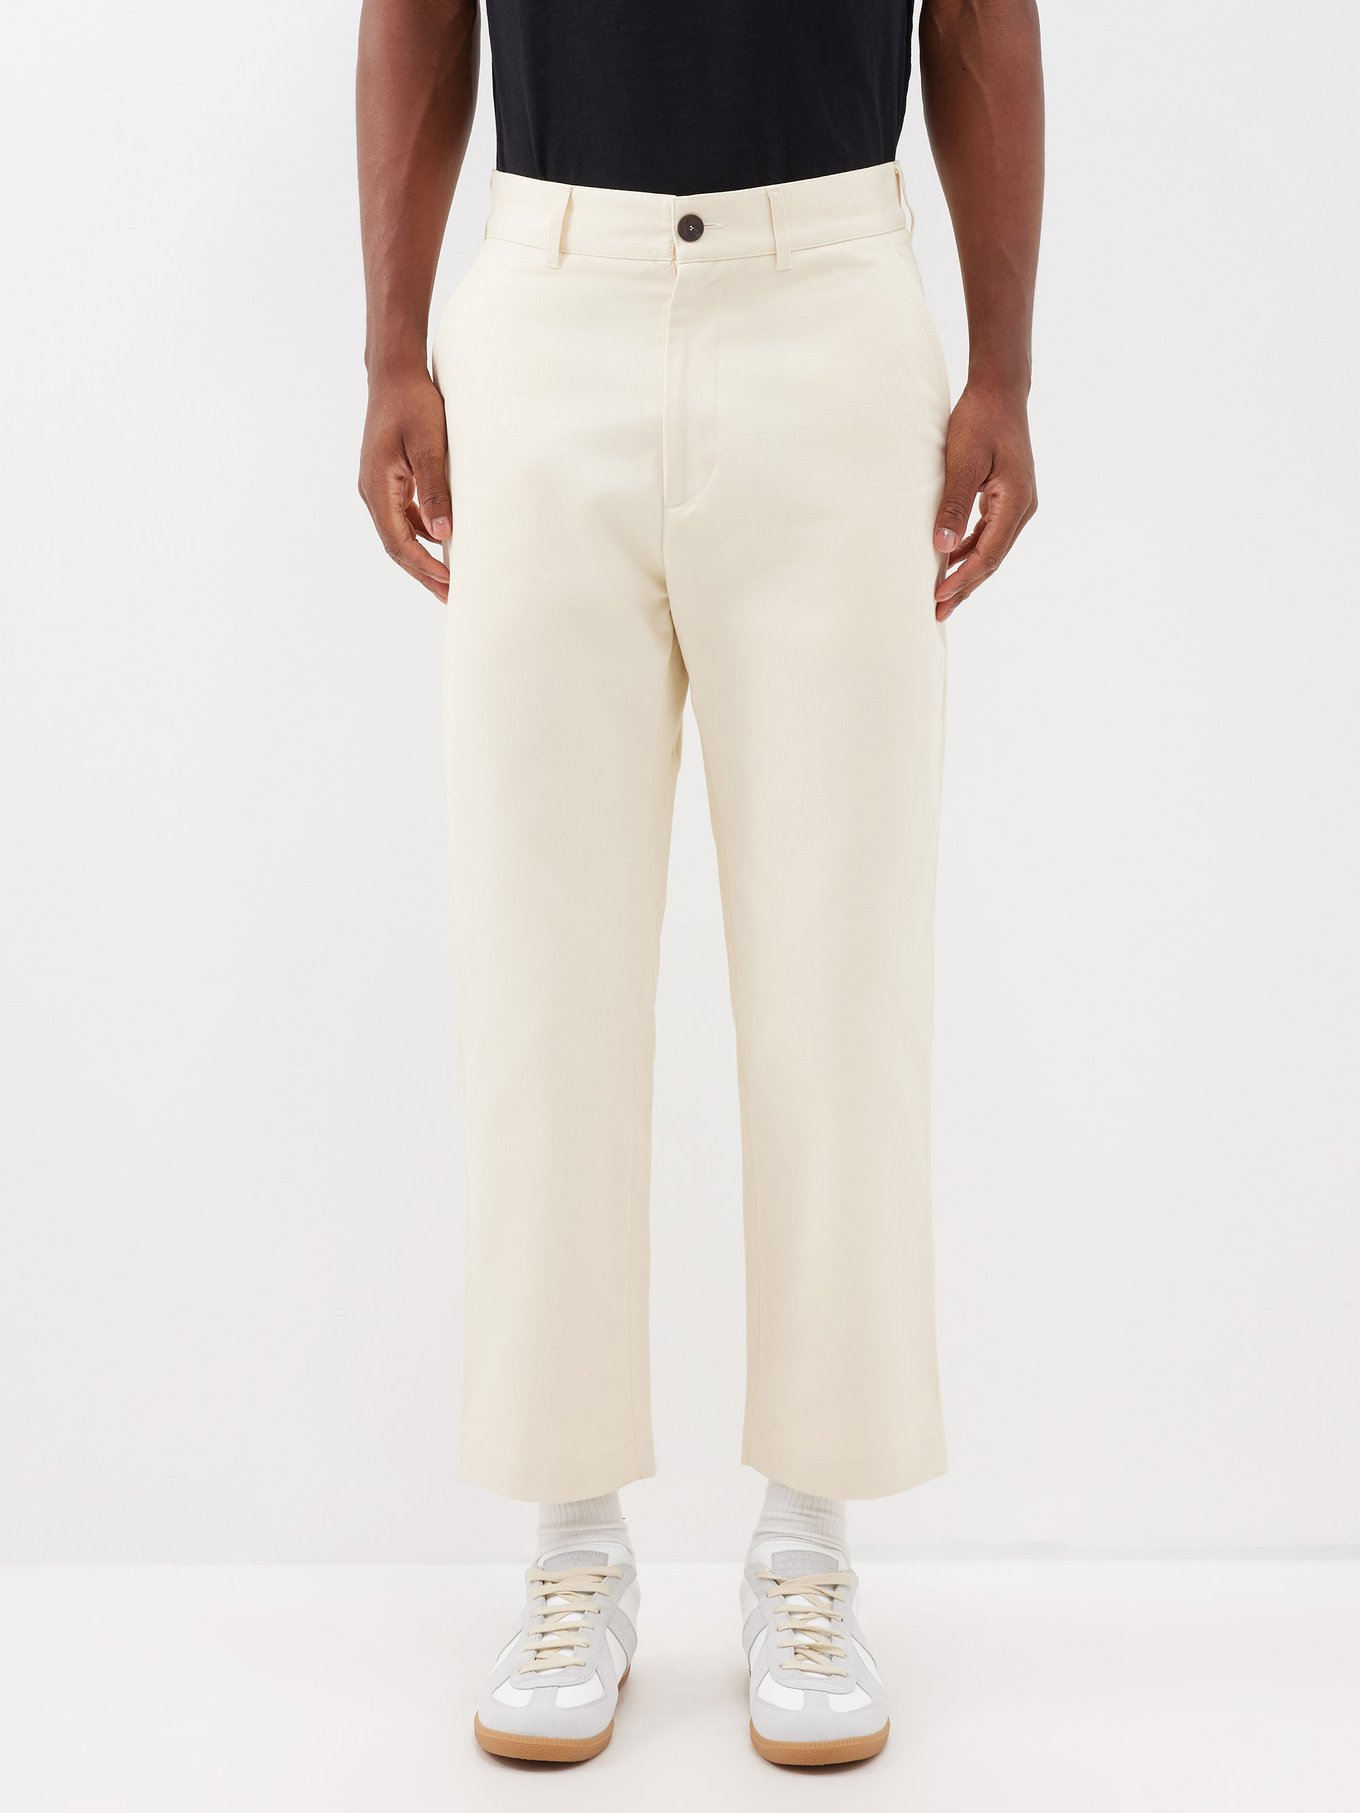 Bill cotton-twill chino trousers | Studio Nicholson